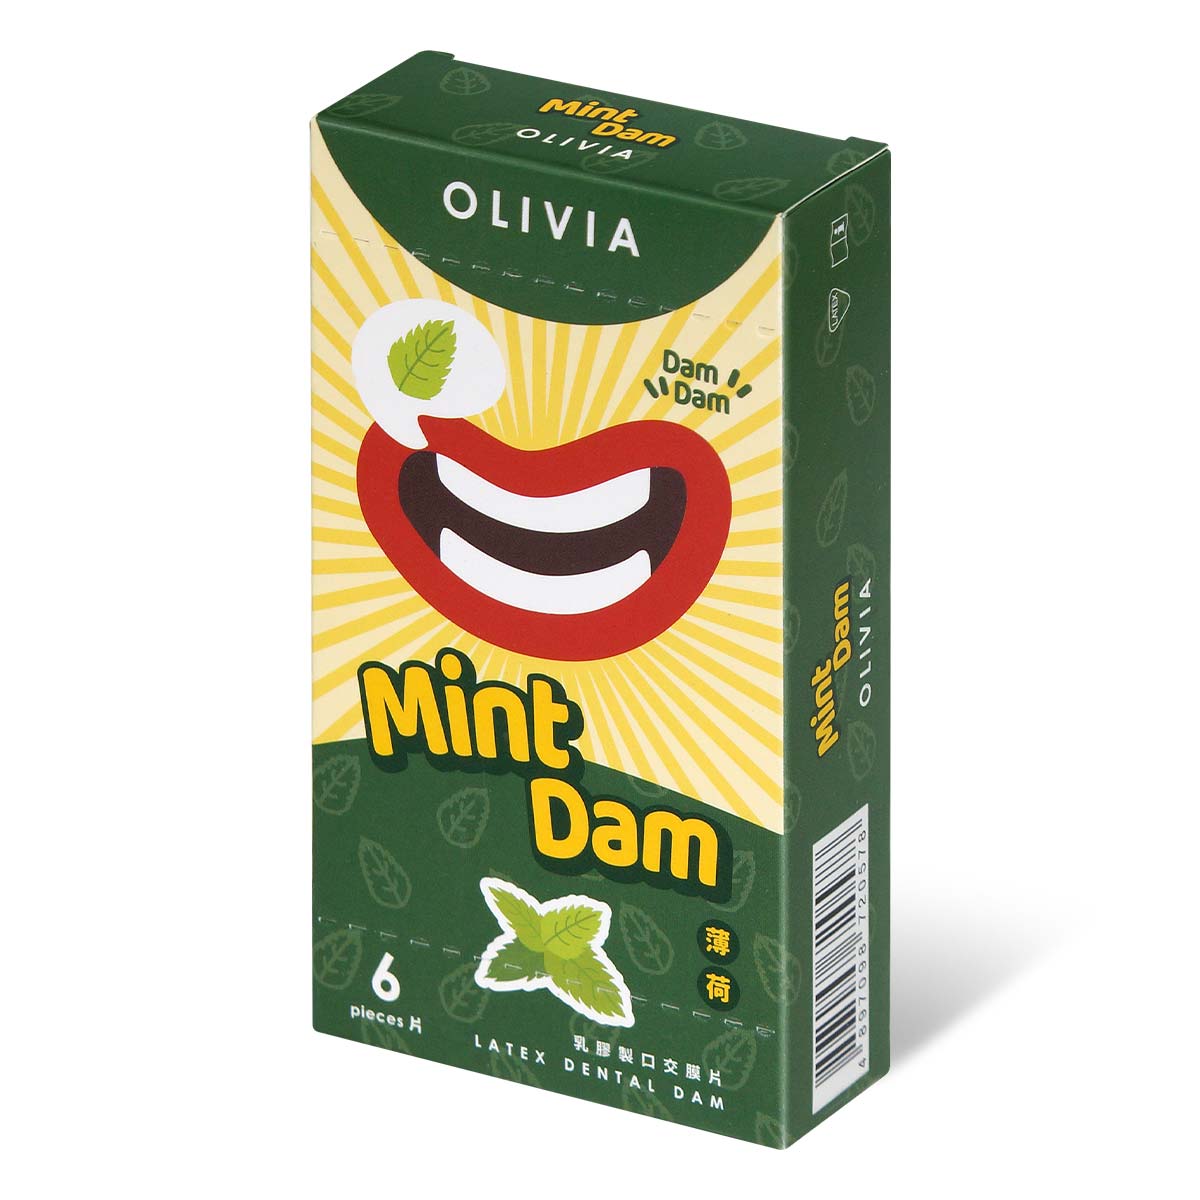 Olivia Mint Scent 6's Pack Latex Dental Dam-thumb_1